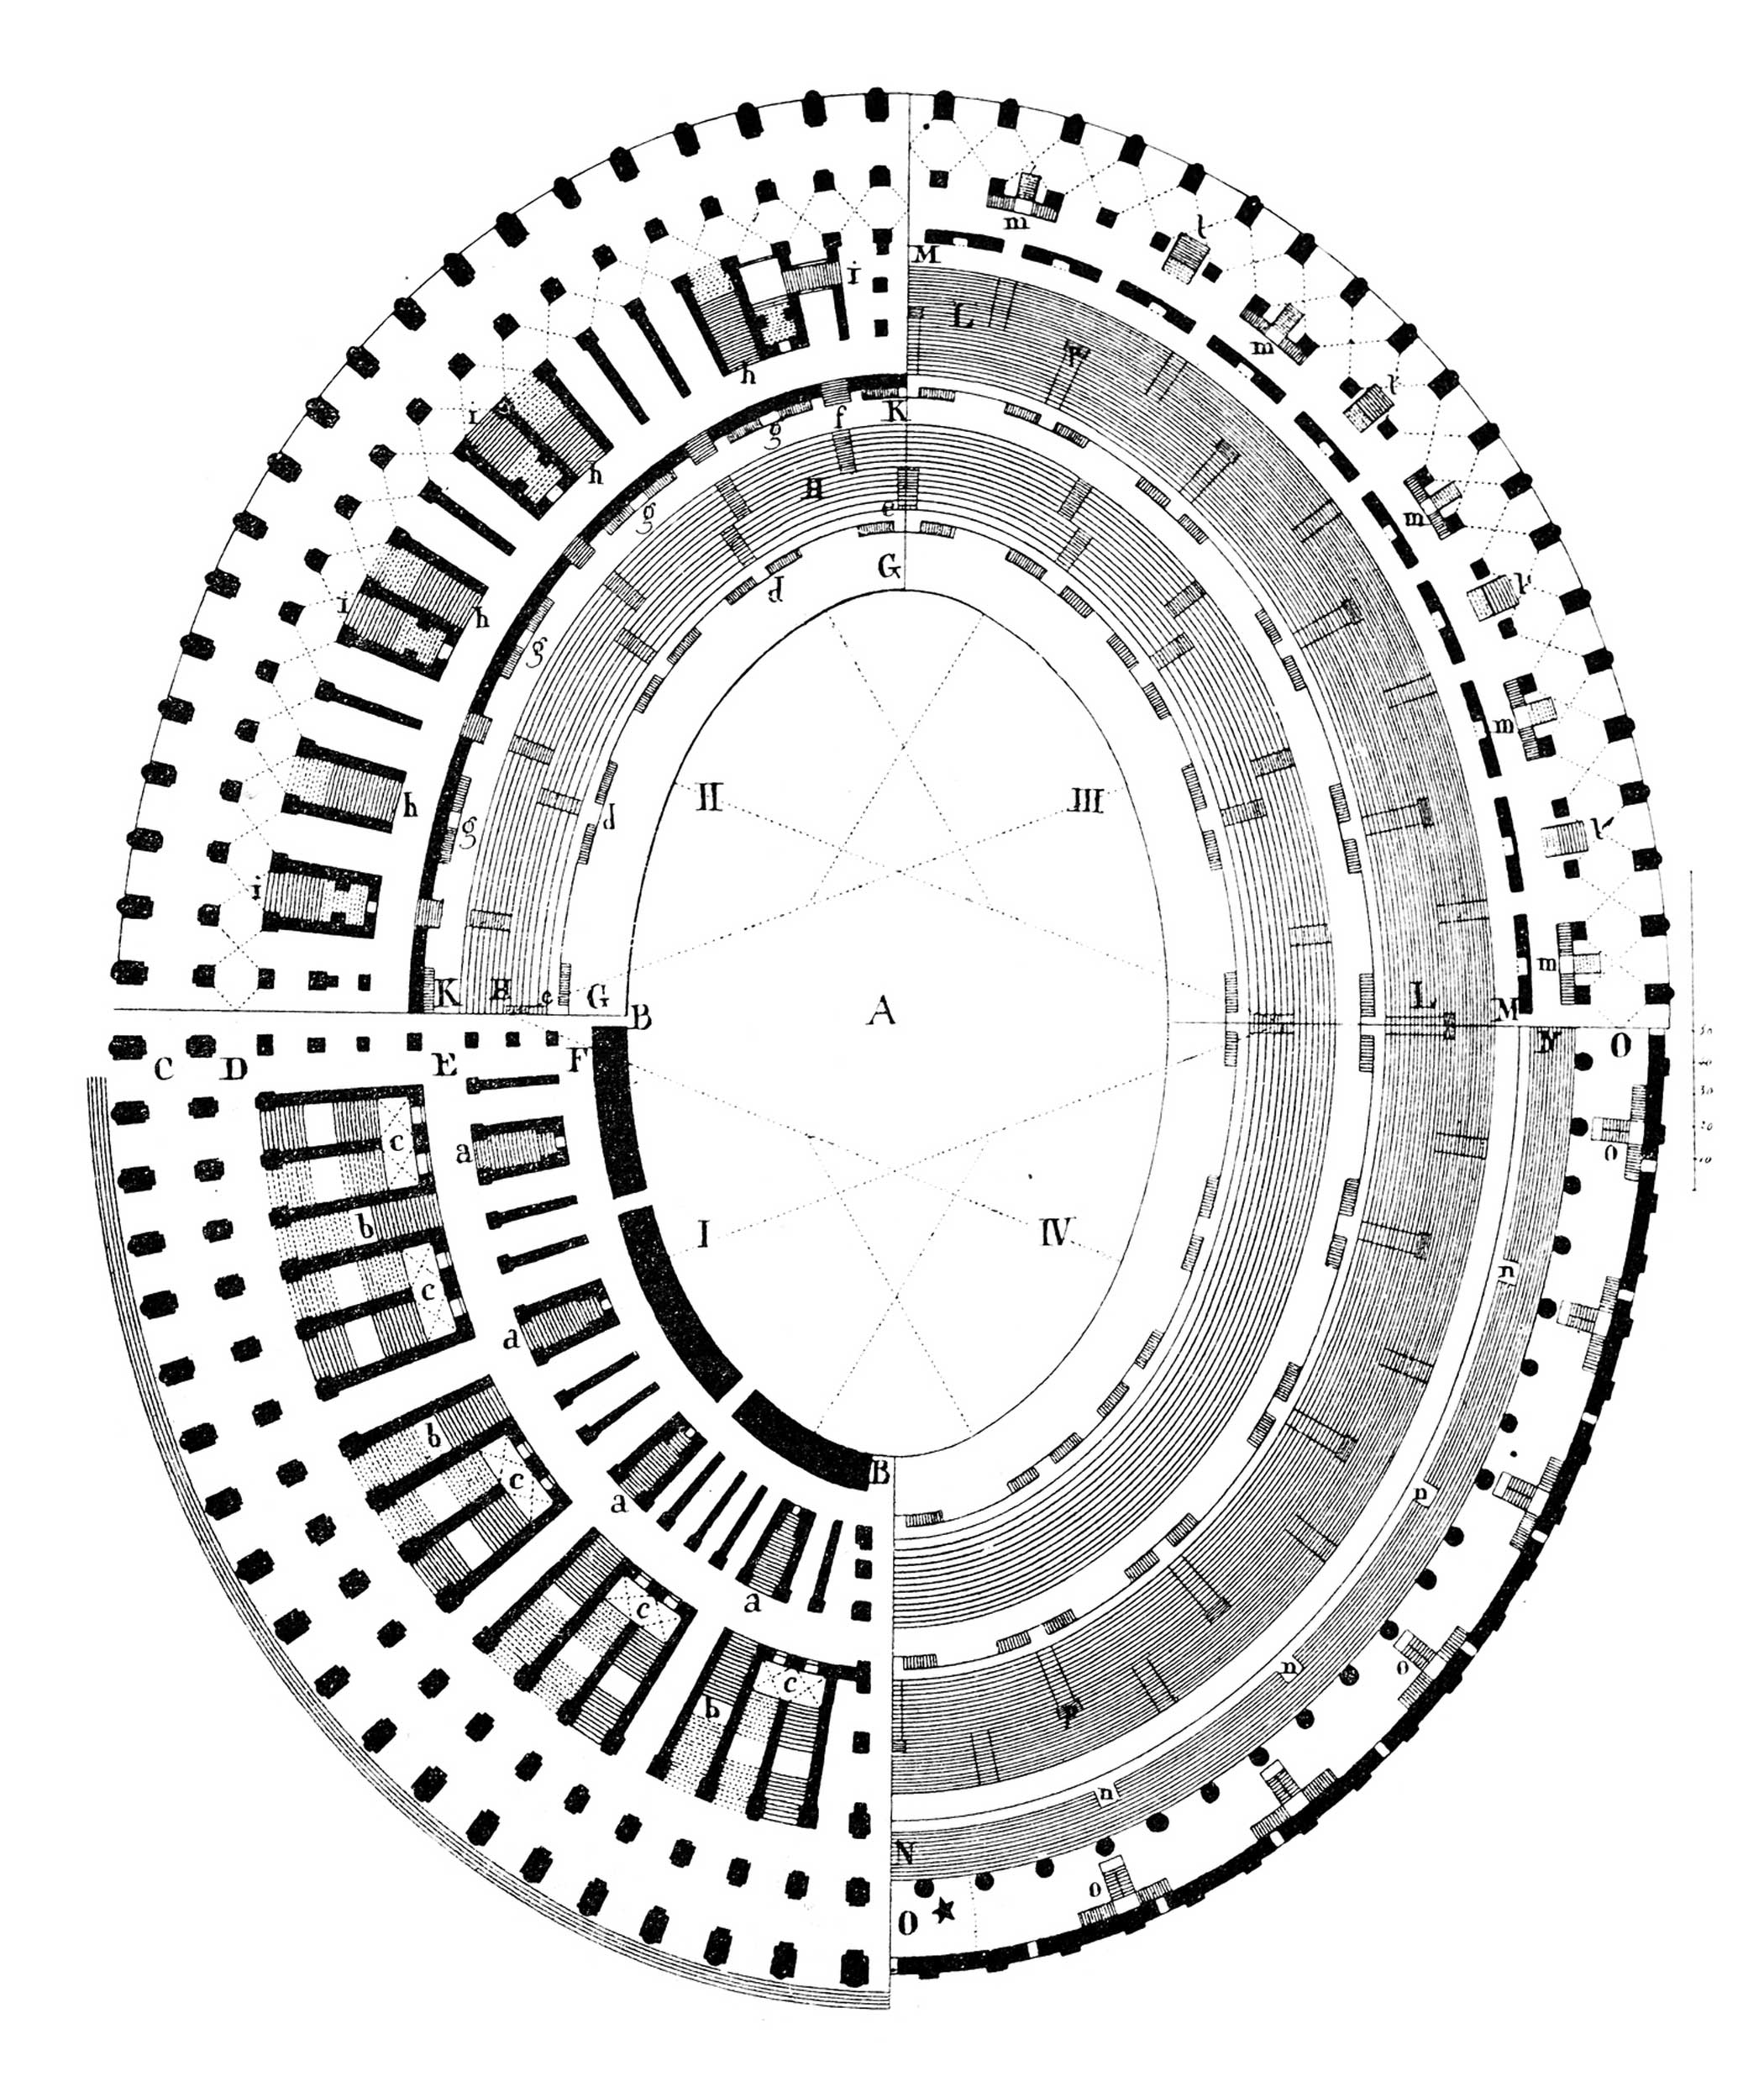 Planimetria Colosseo